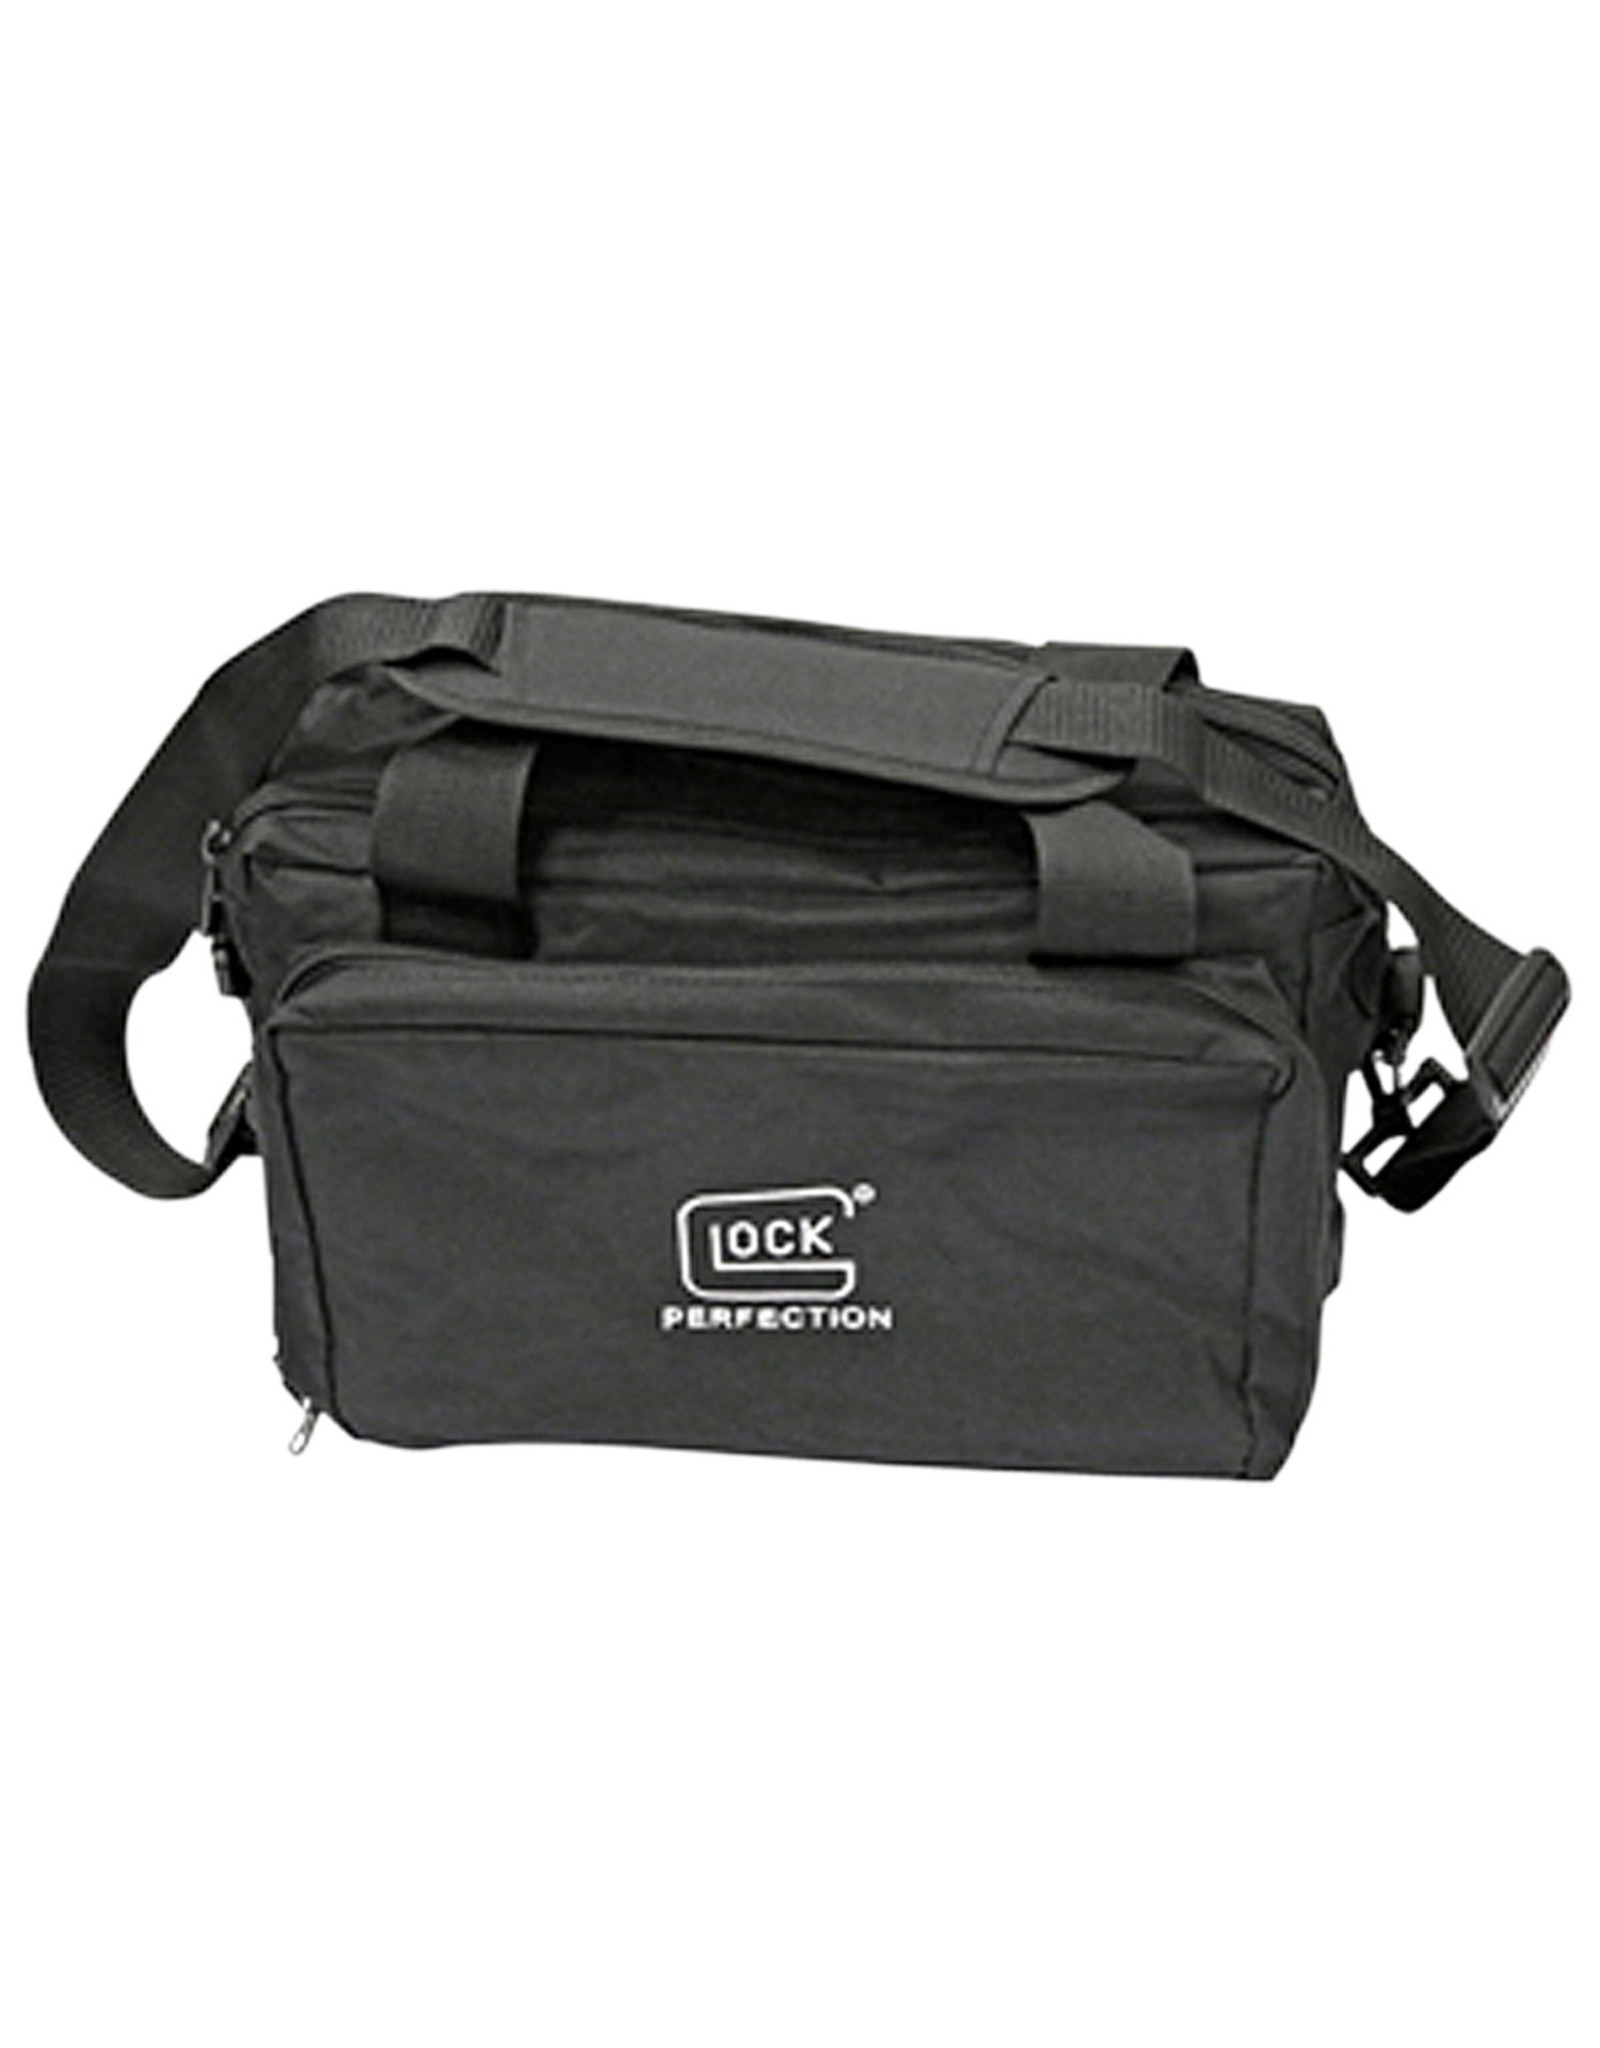 Glock Range Bag